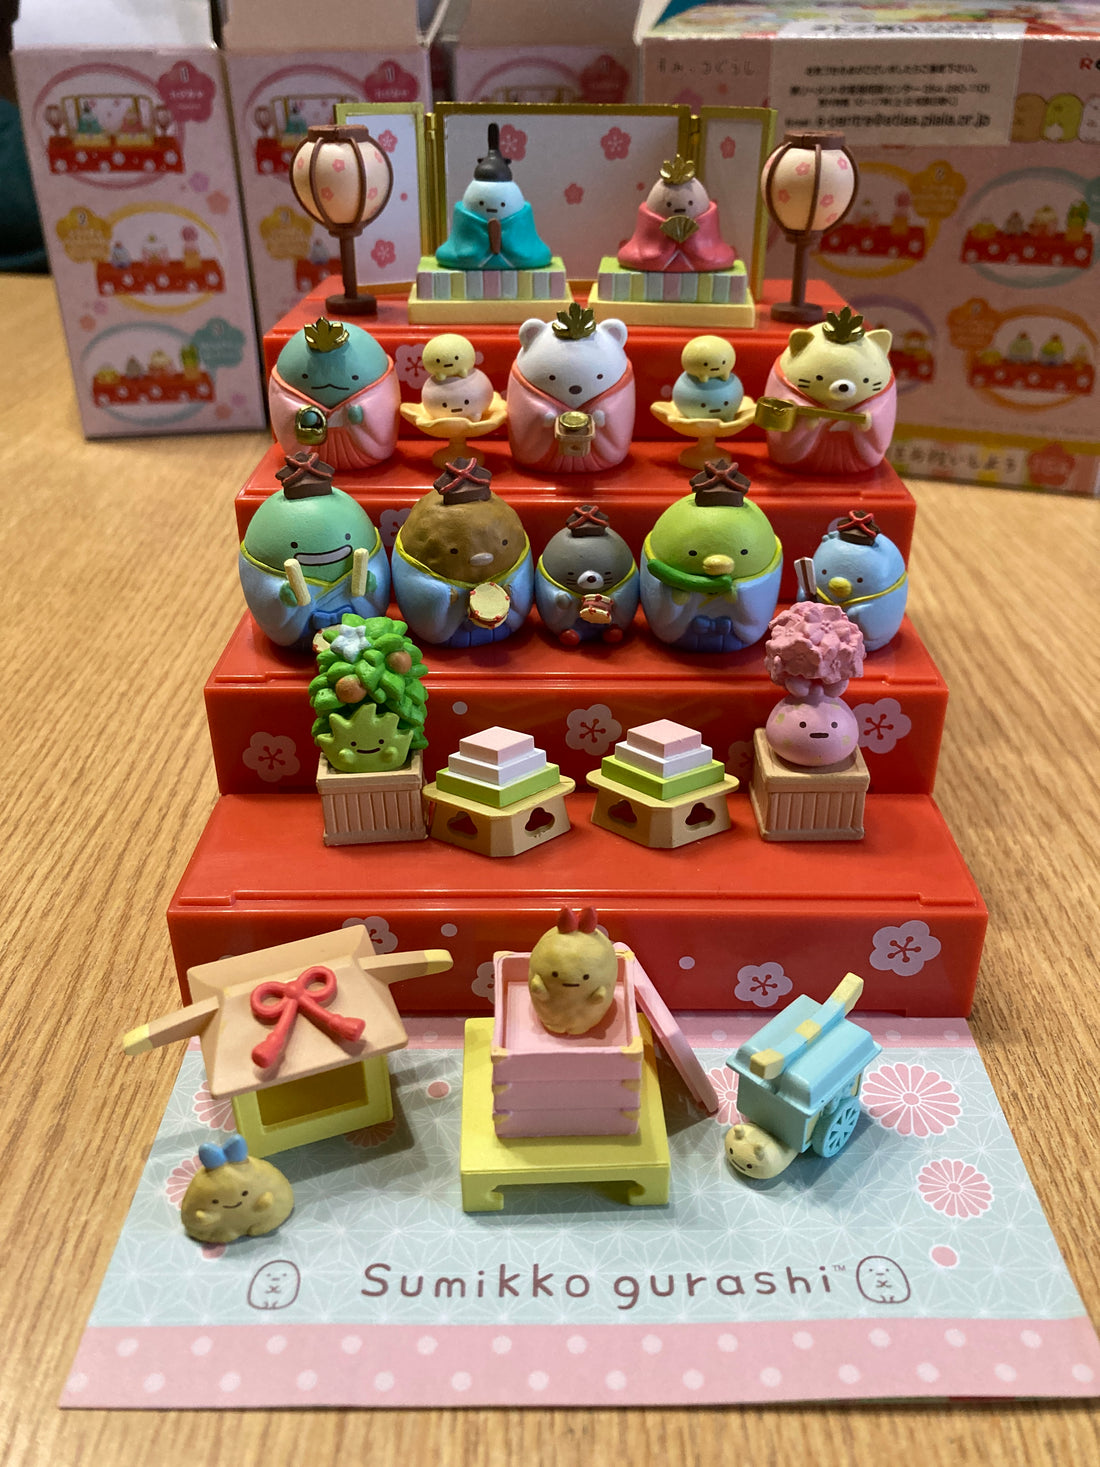 Re-Ment Sumikko Gurashi's Hinamatsuri (Doll Festival) Miniature Full Set